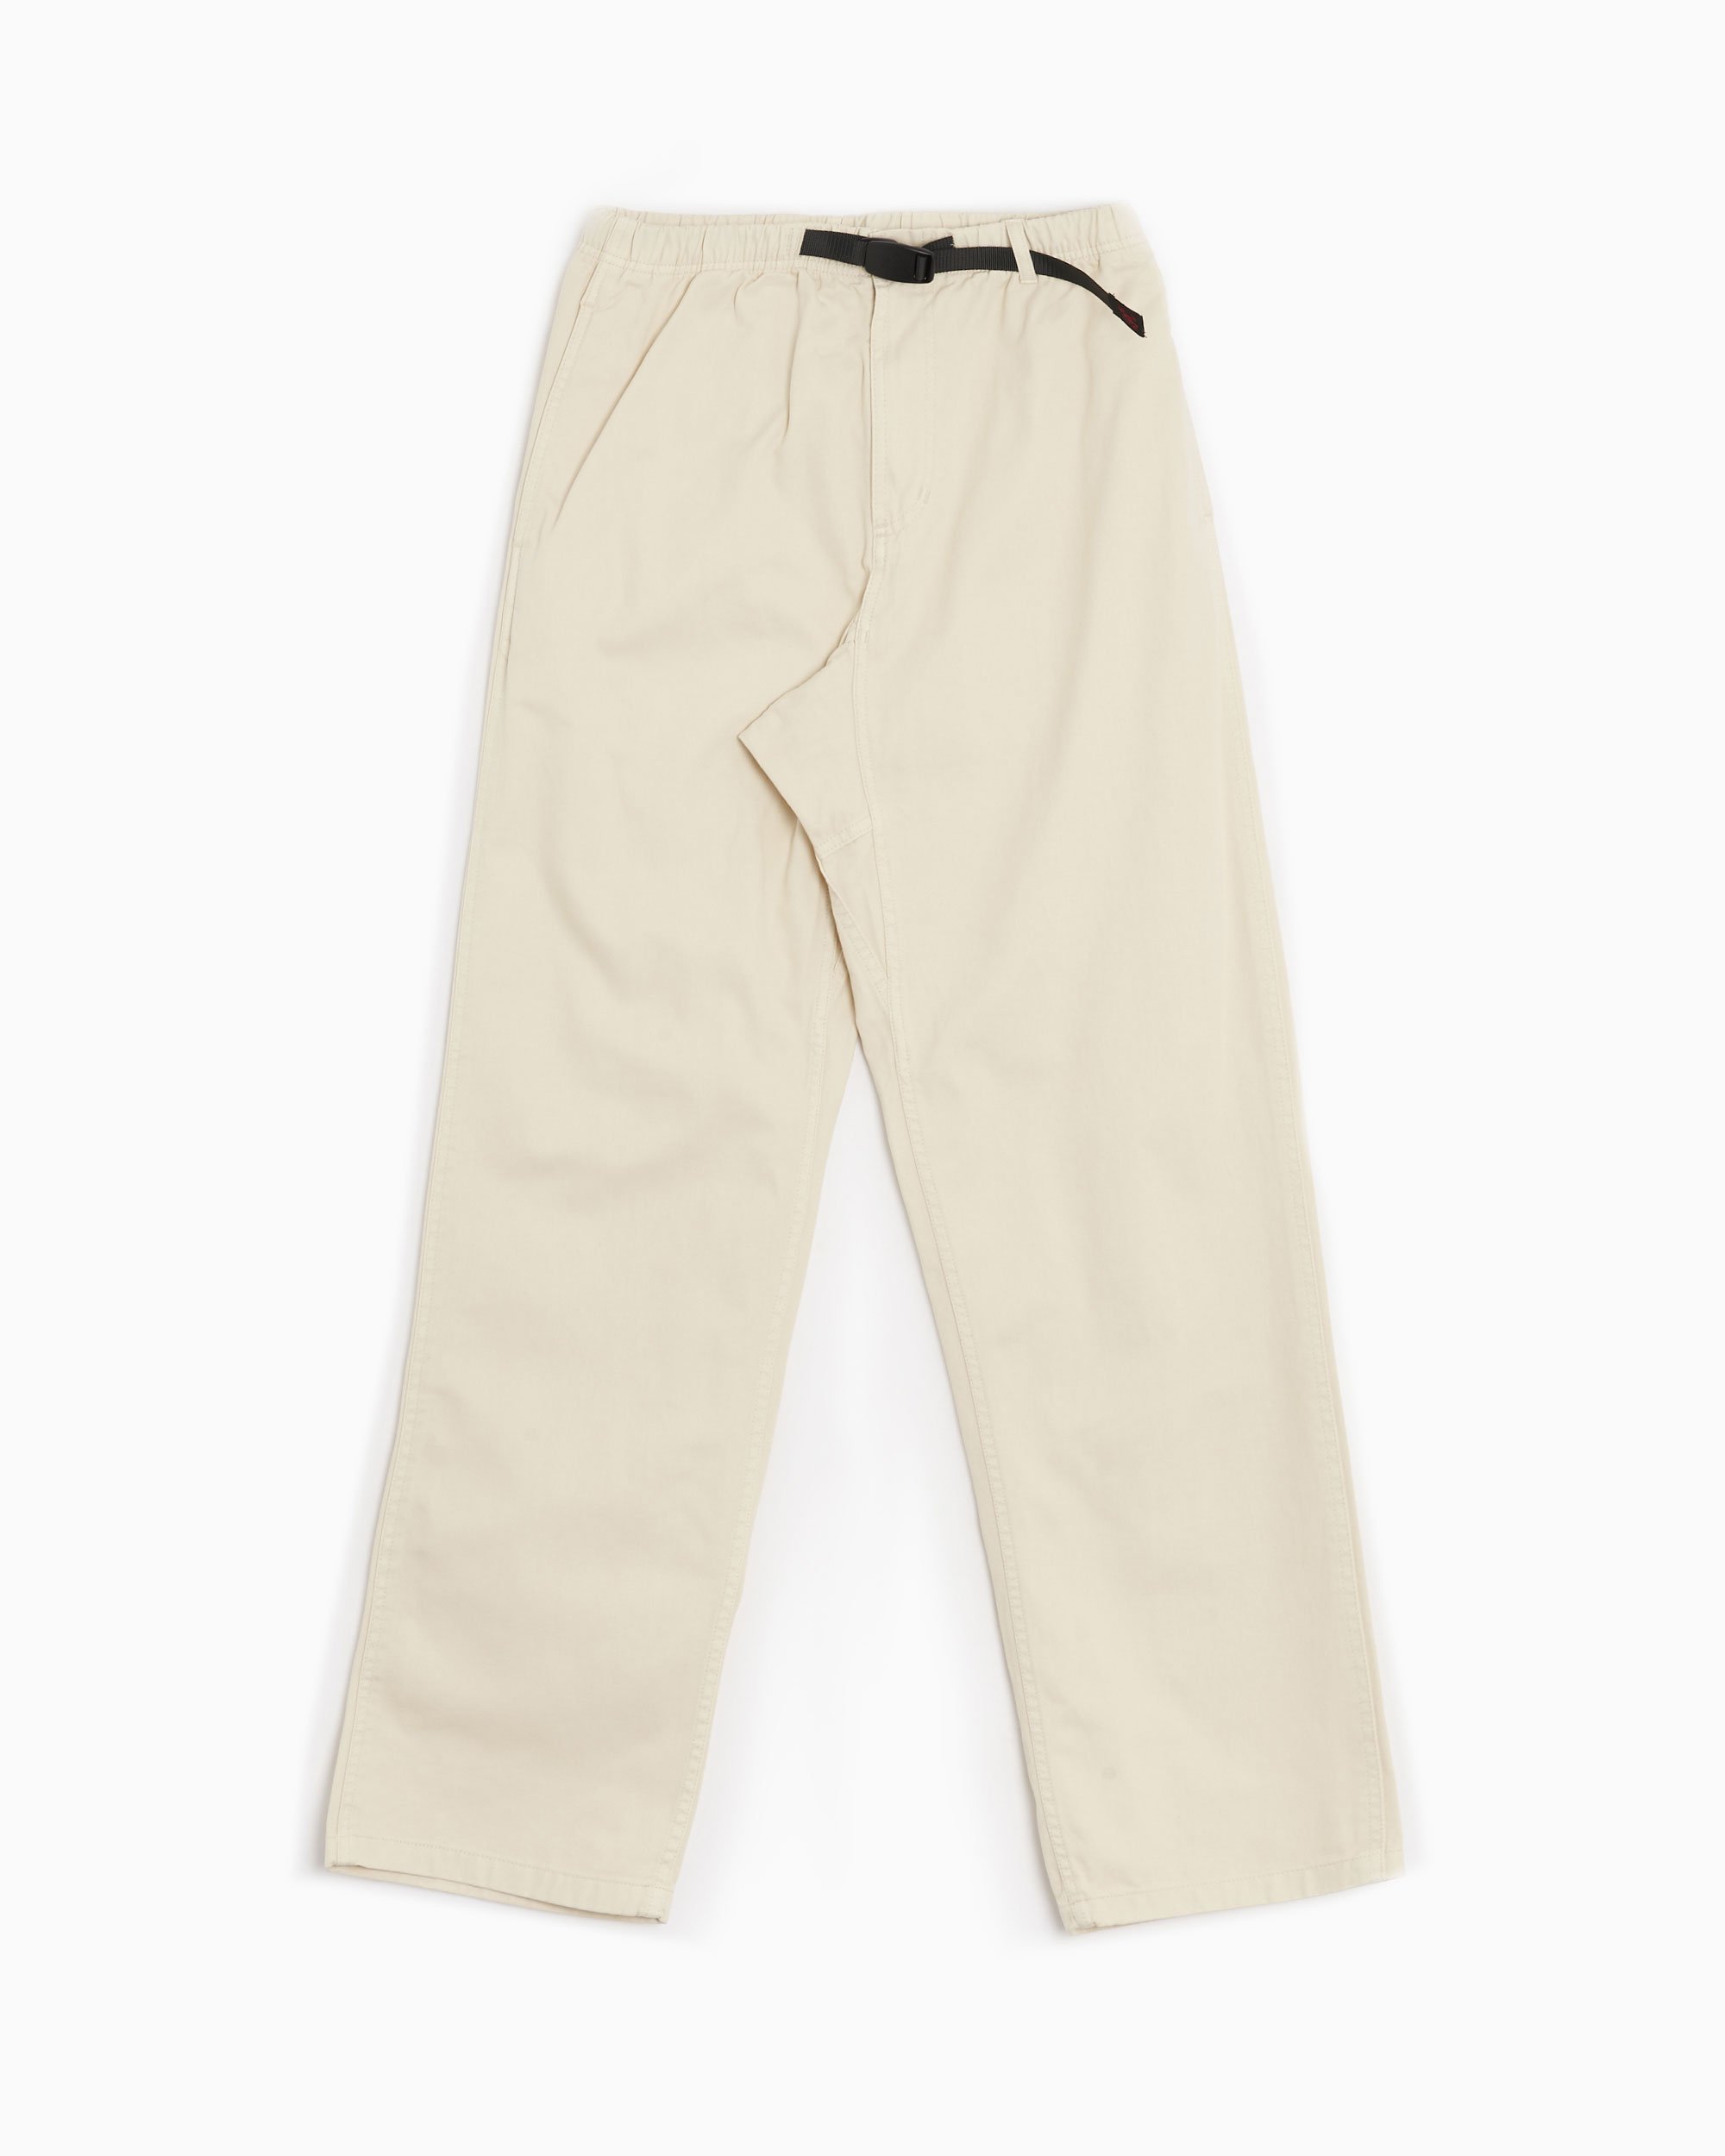 Gramicci Men's Pants Gray G102-OGT-GREIGE| Buy Online at FOOTDISTRICT